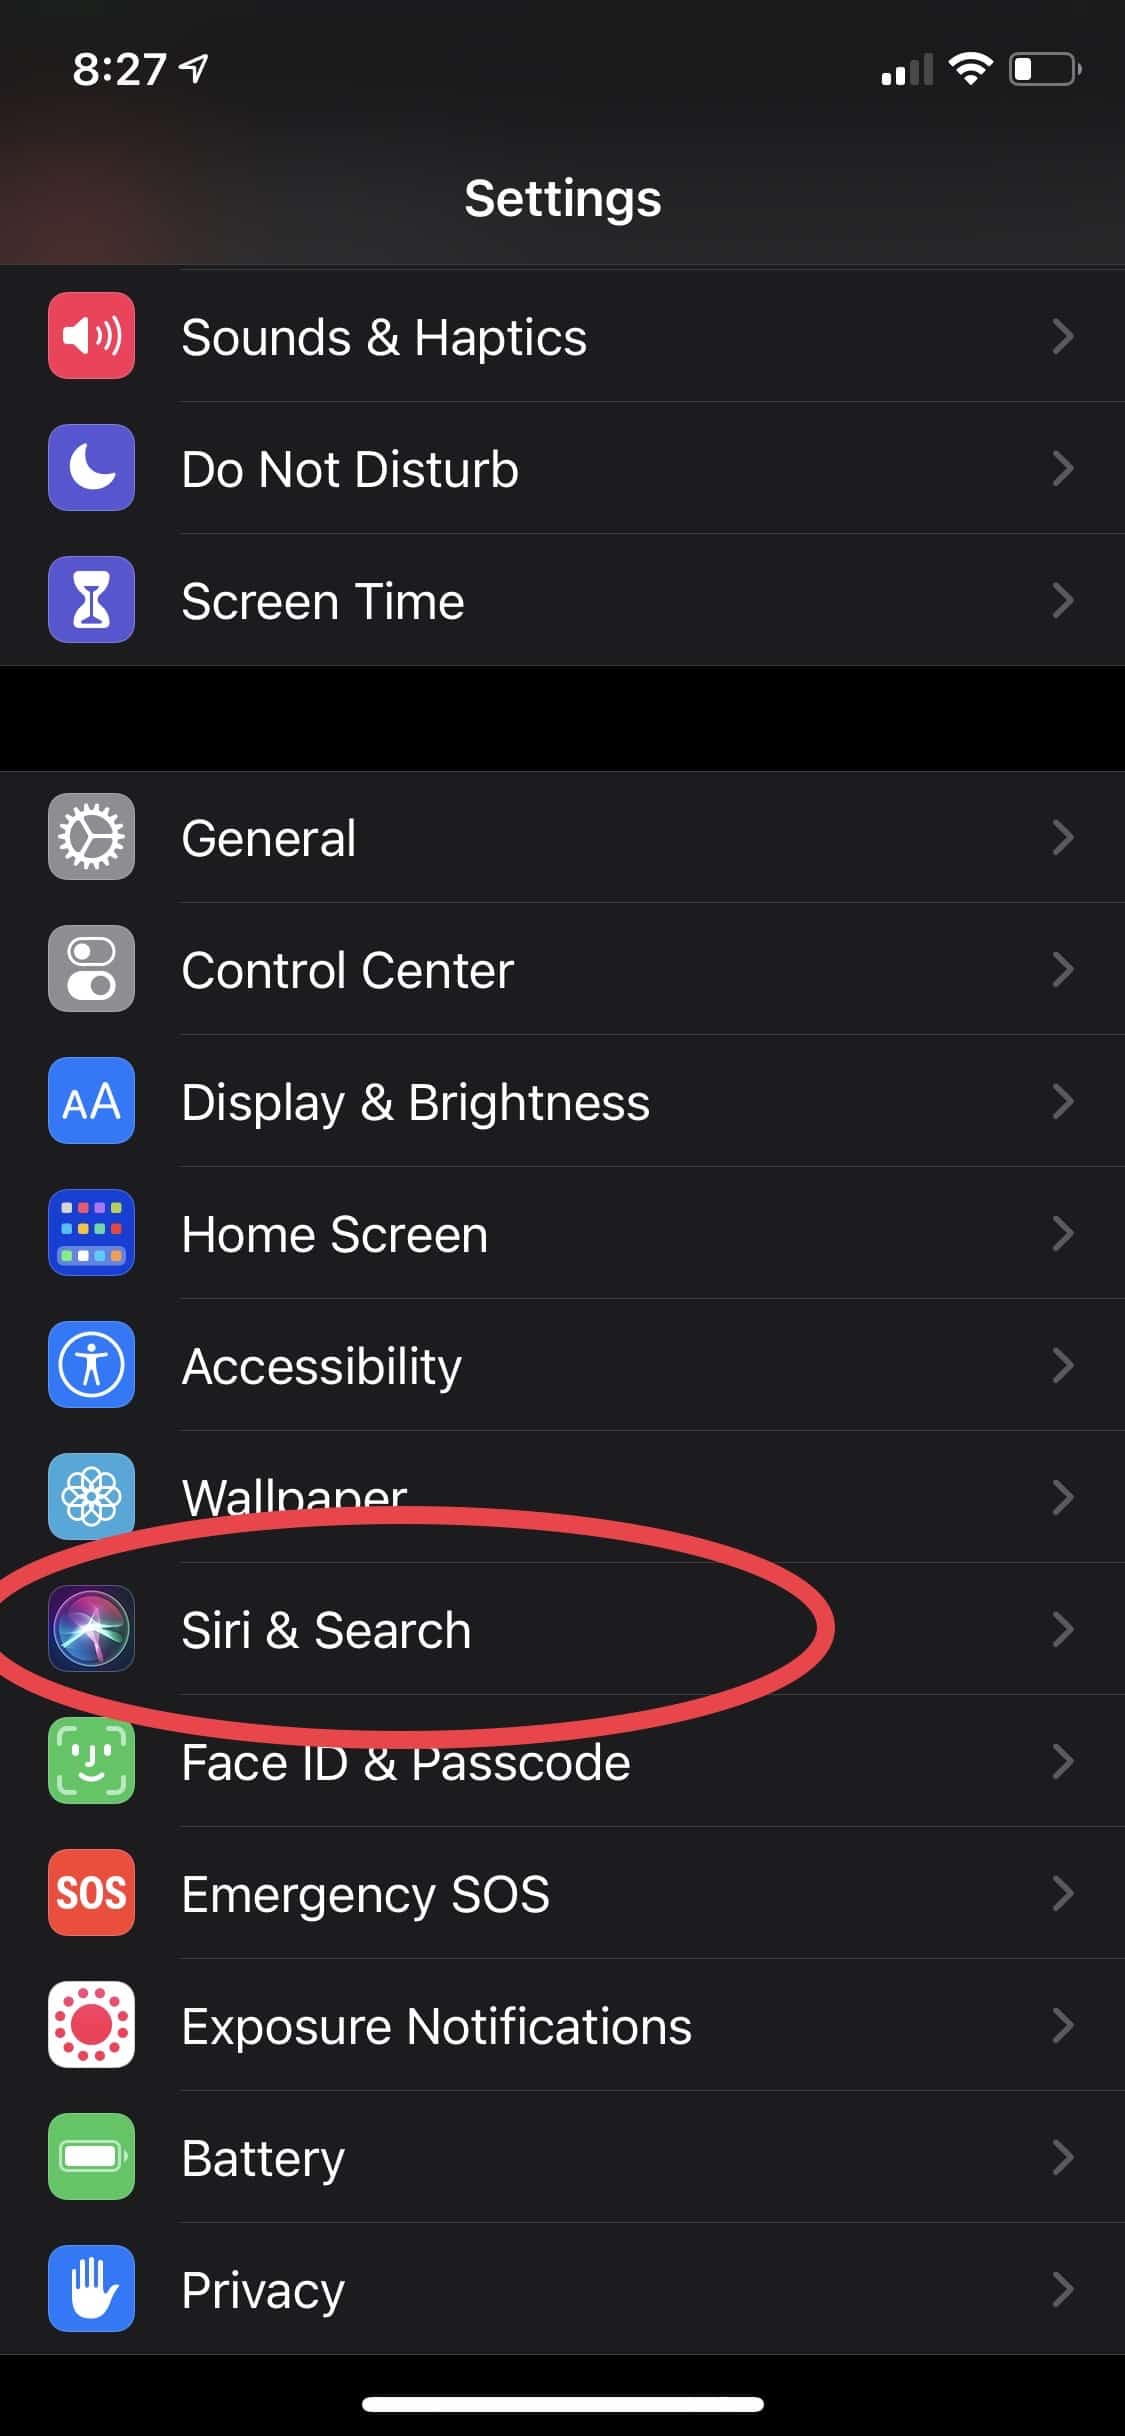 Tap "Siri & Search" - Apple Maps